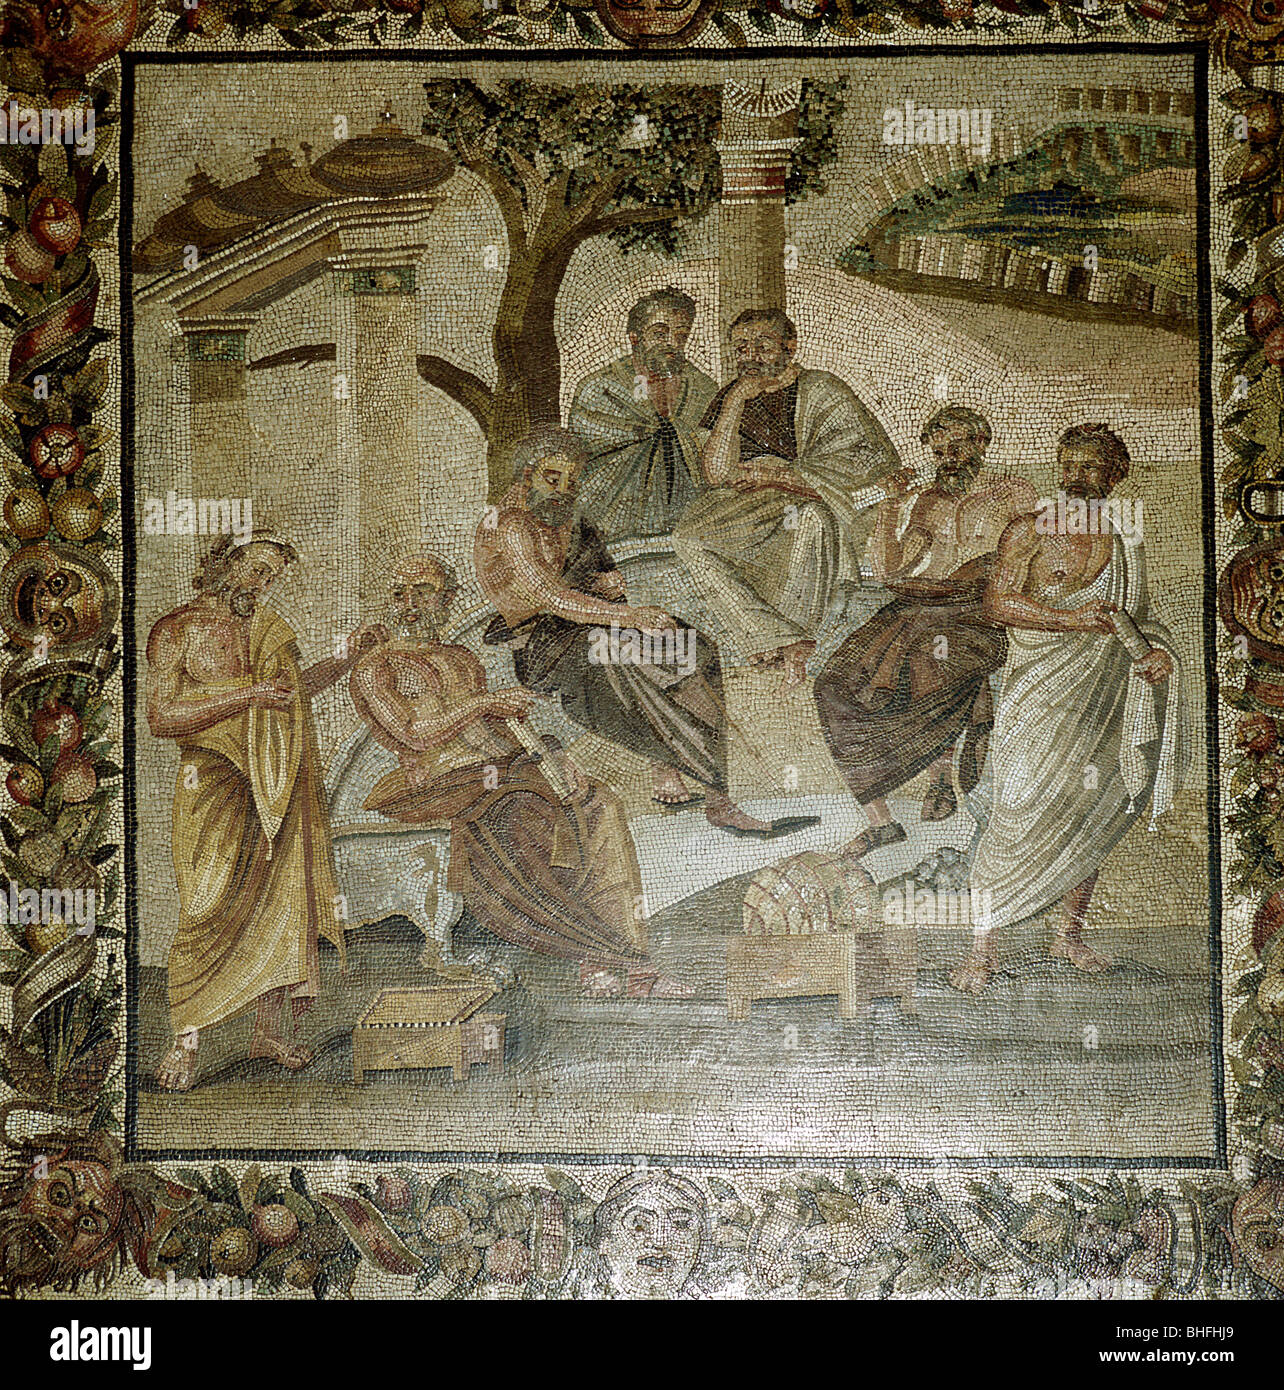 Roman mosaic of Plato and his school of philosophers, Pompeii, Italy. Artist: Unknown Stock Photo